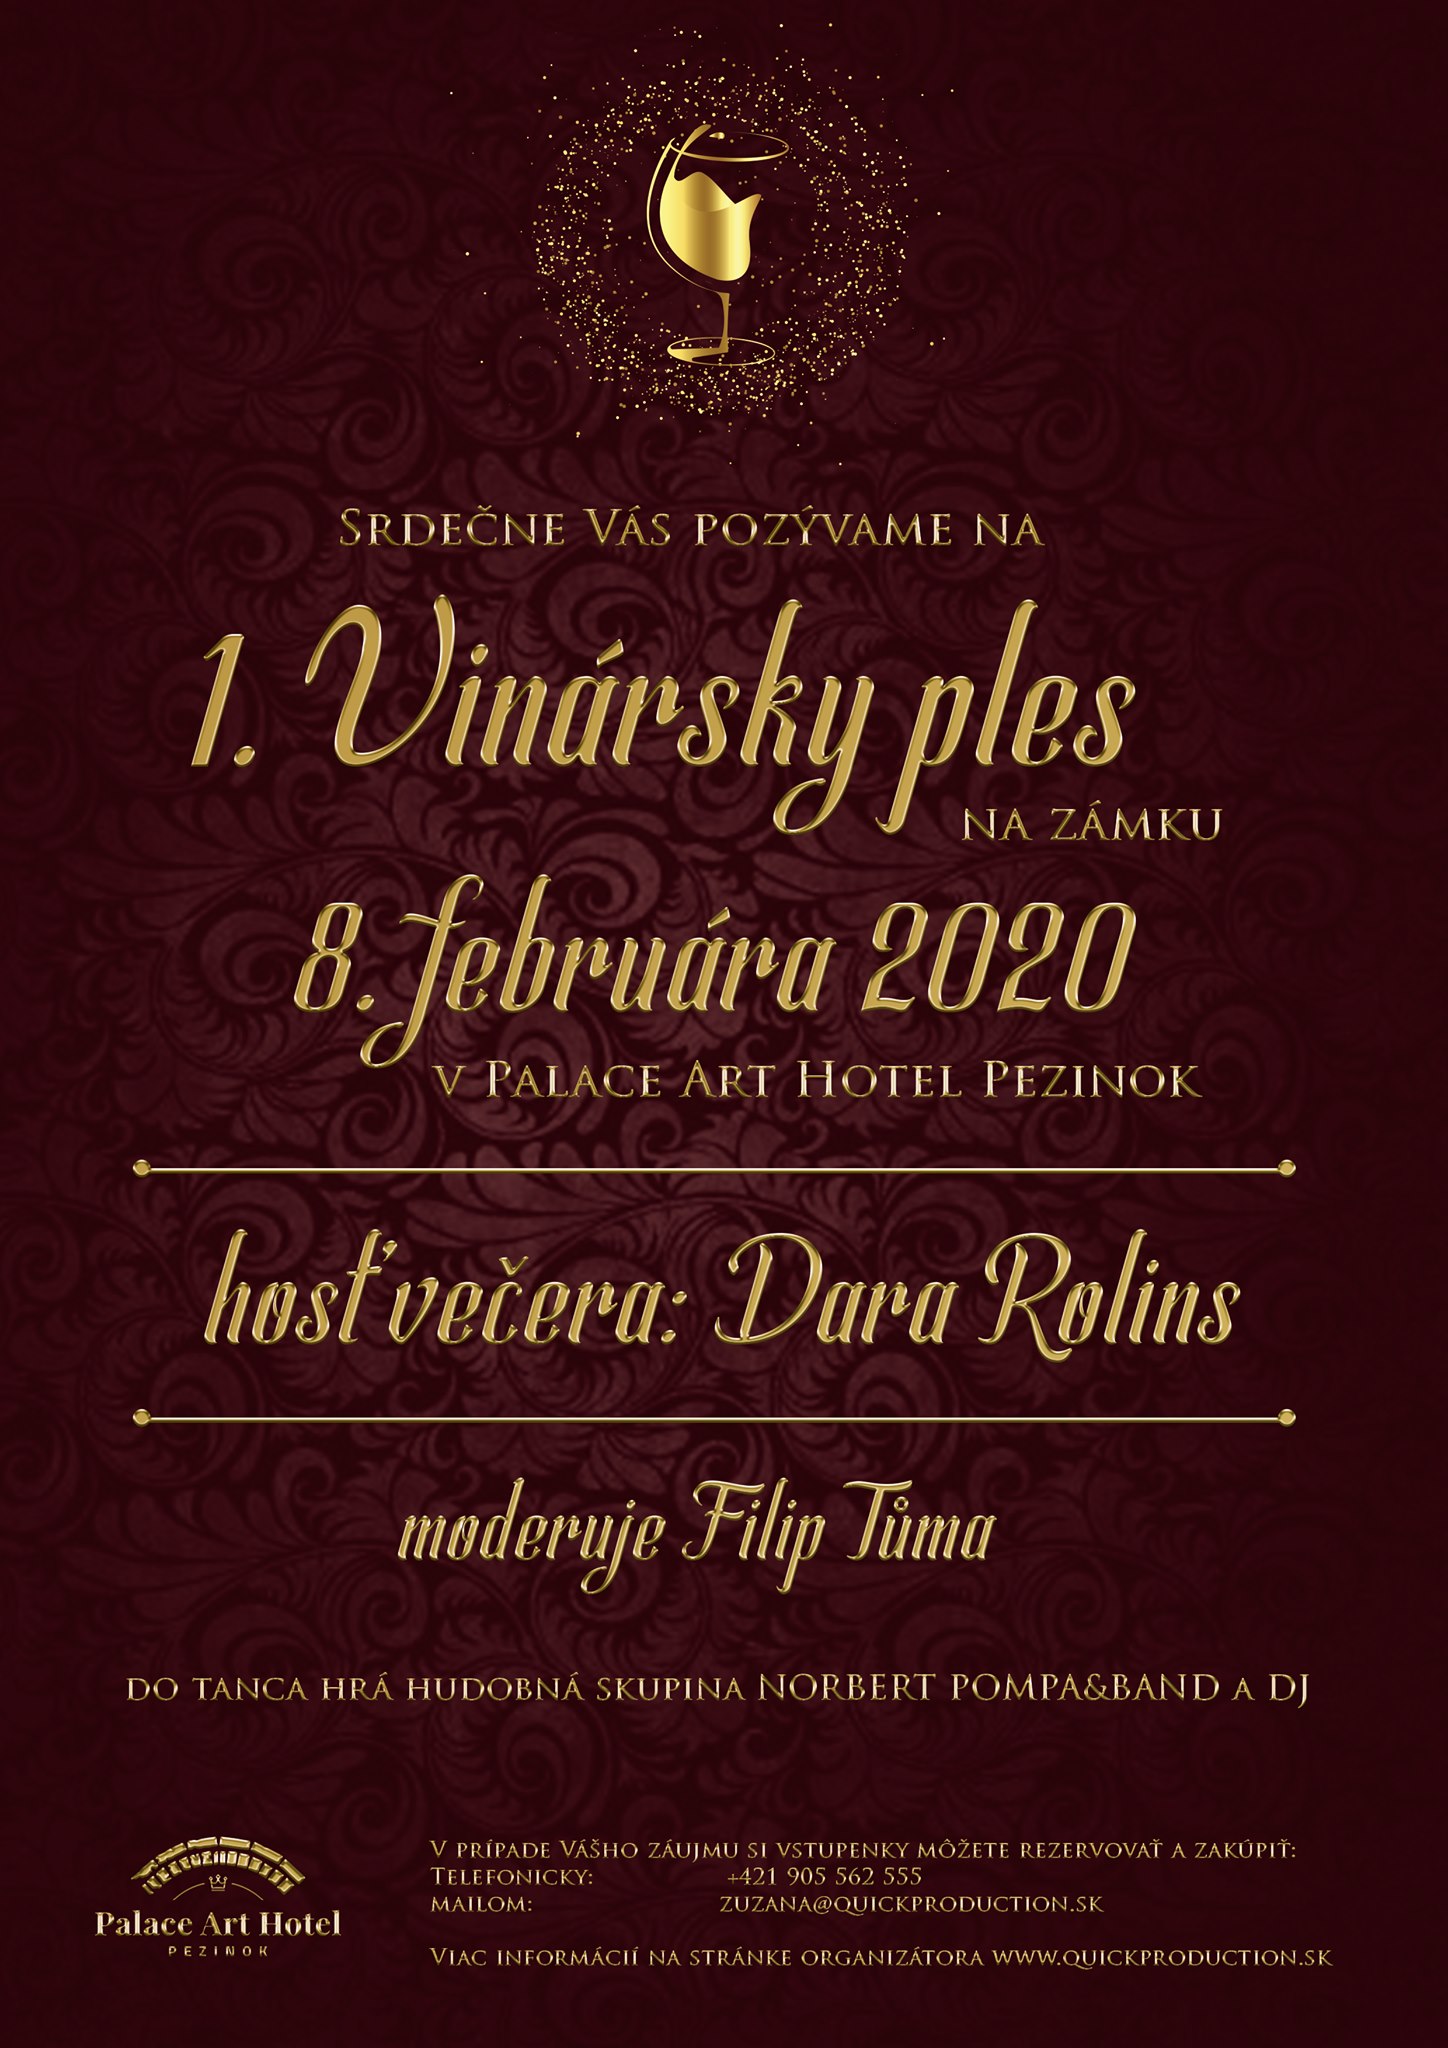 Vinrsky ples na zmku 2020 Pezinok - 1. ronk